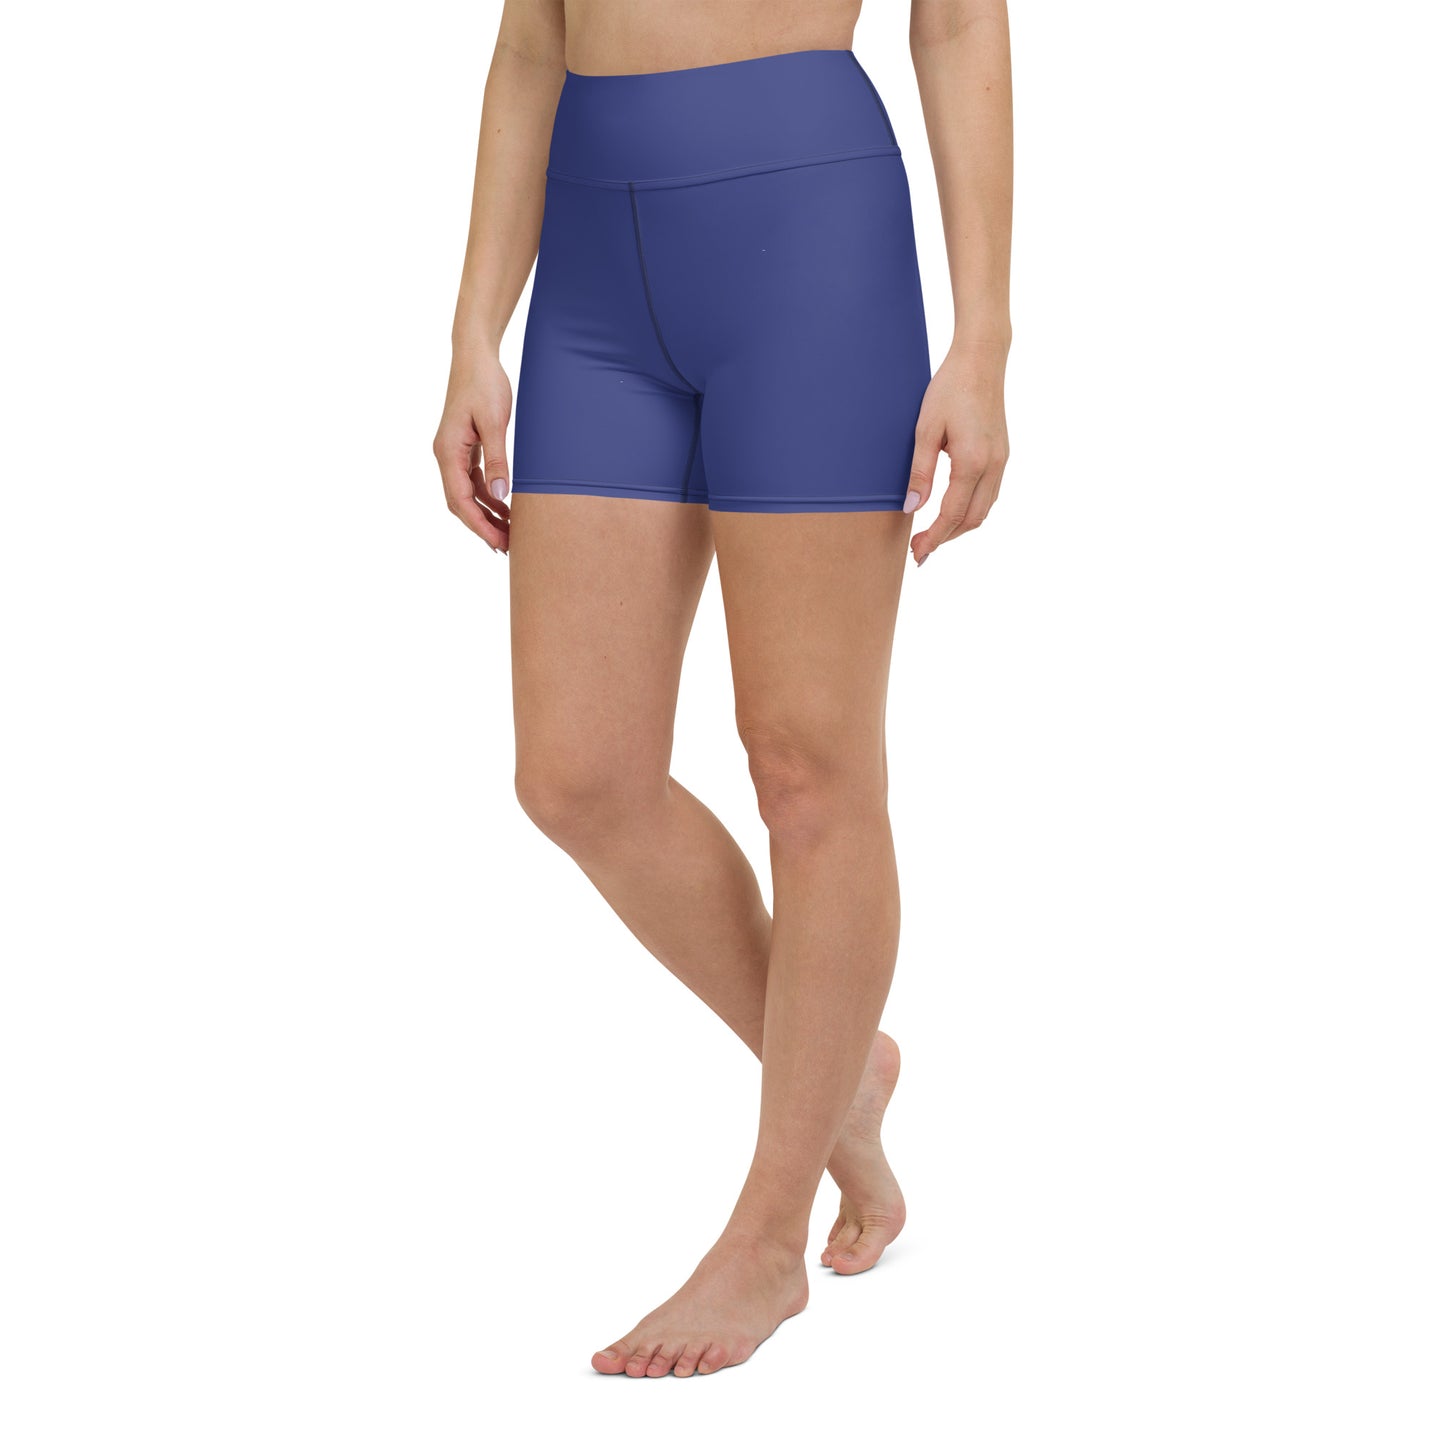 Monopoli Solid Blue High Waist Yoga Shorts / Bike Shorts with Inside Pocket